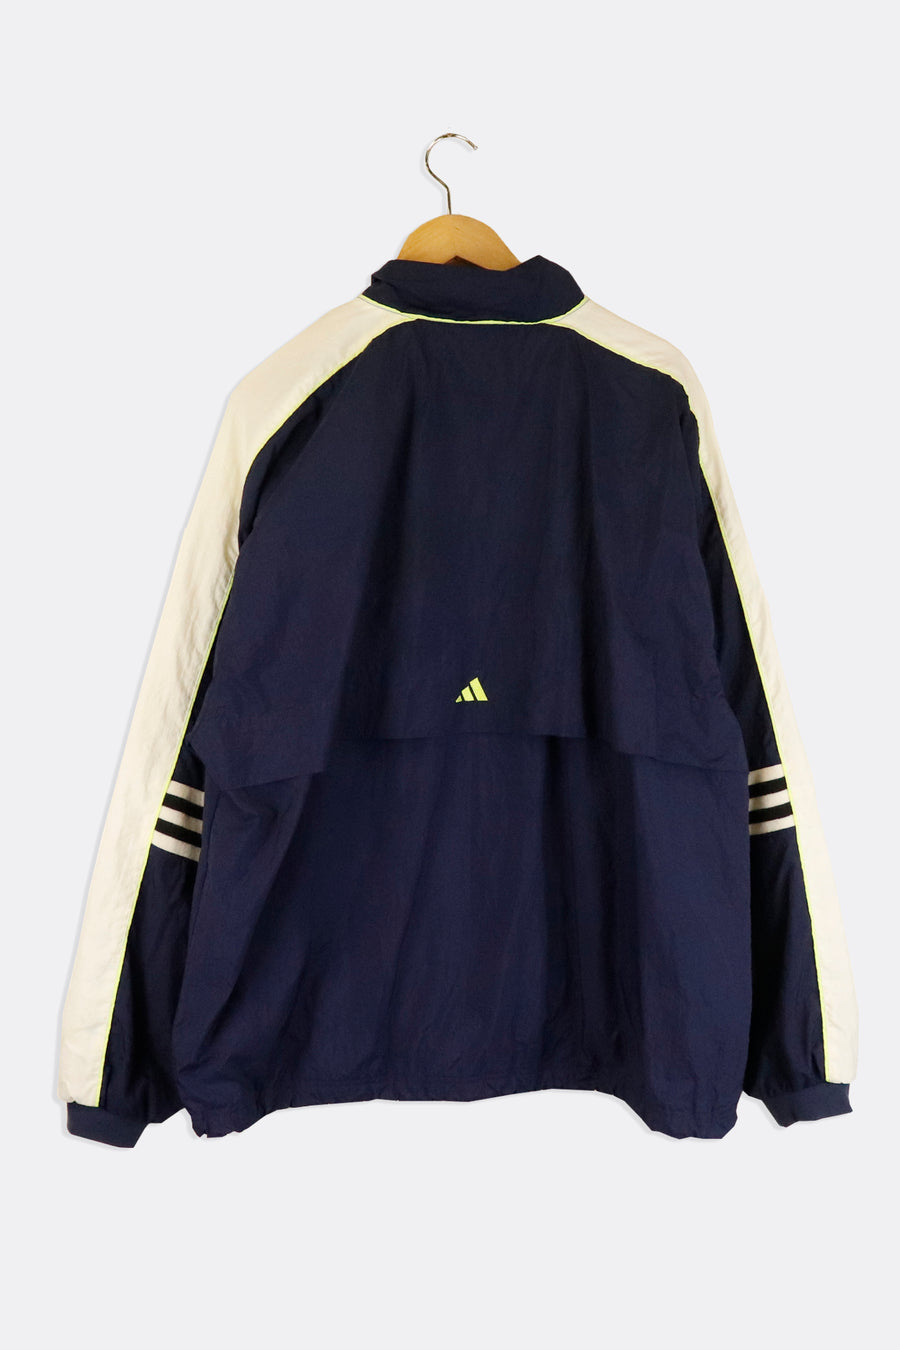 Vintage Adidas Family Circl Club Tennis Full Zip Embroidered Rain Jacket Sz XL